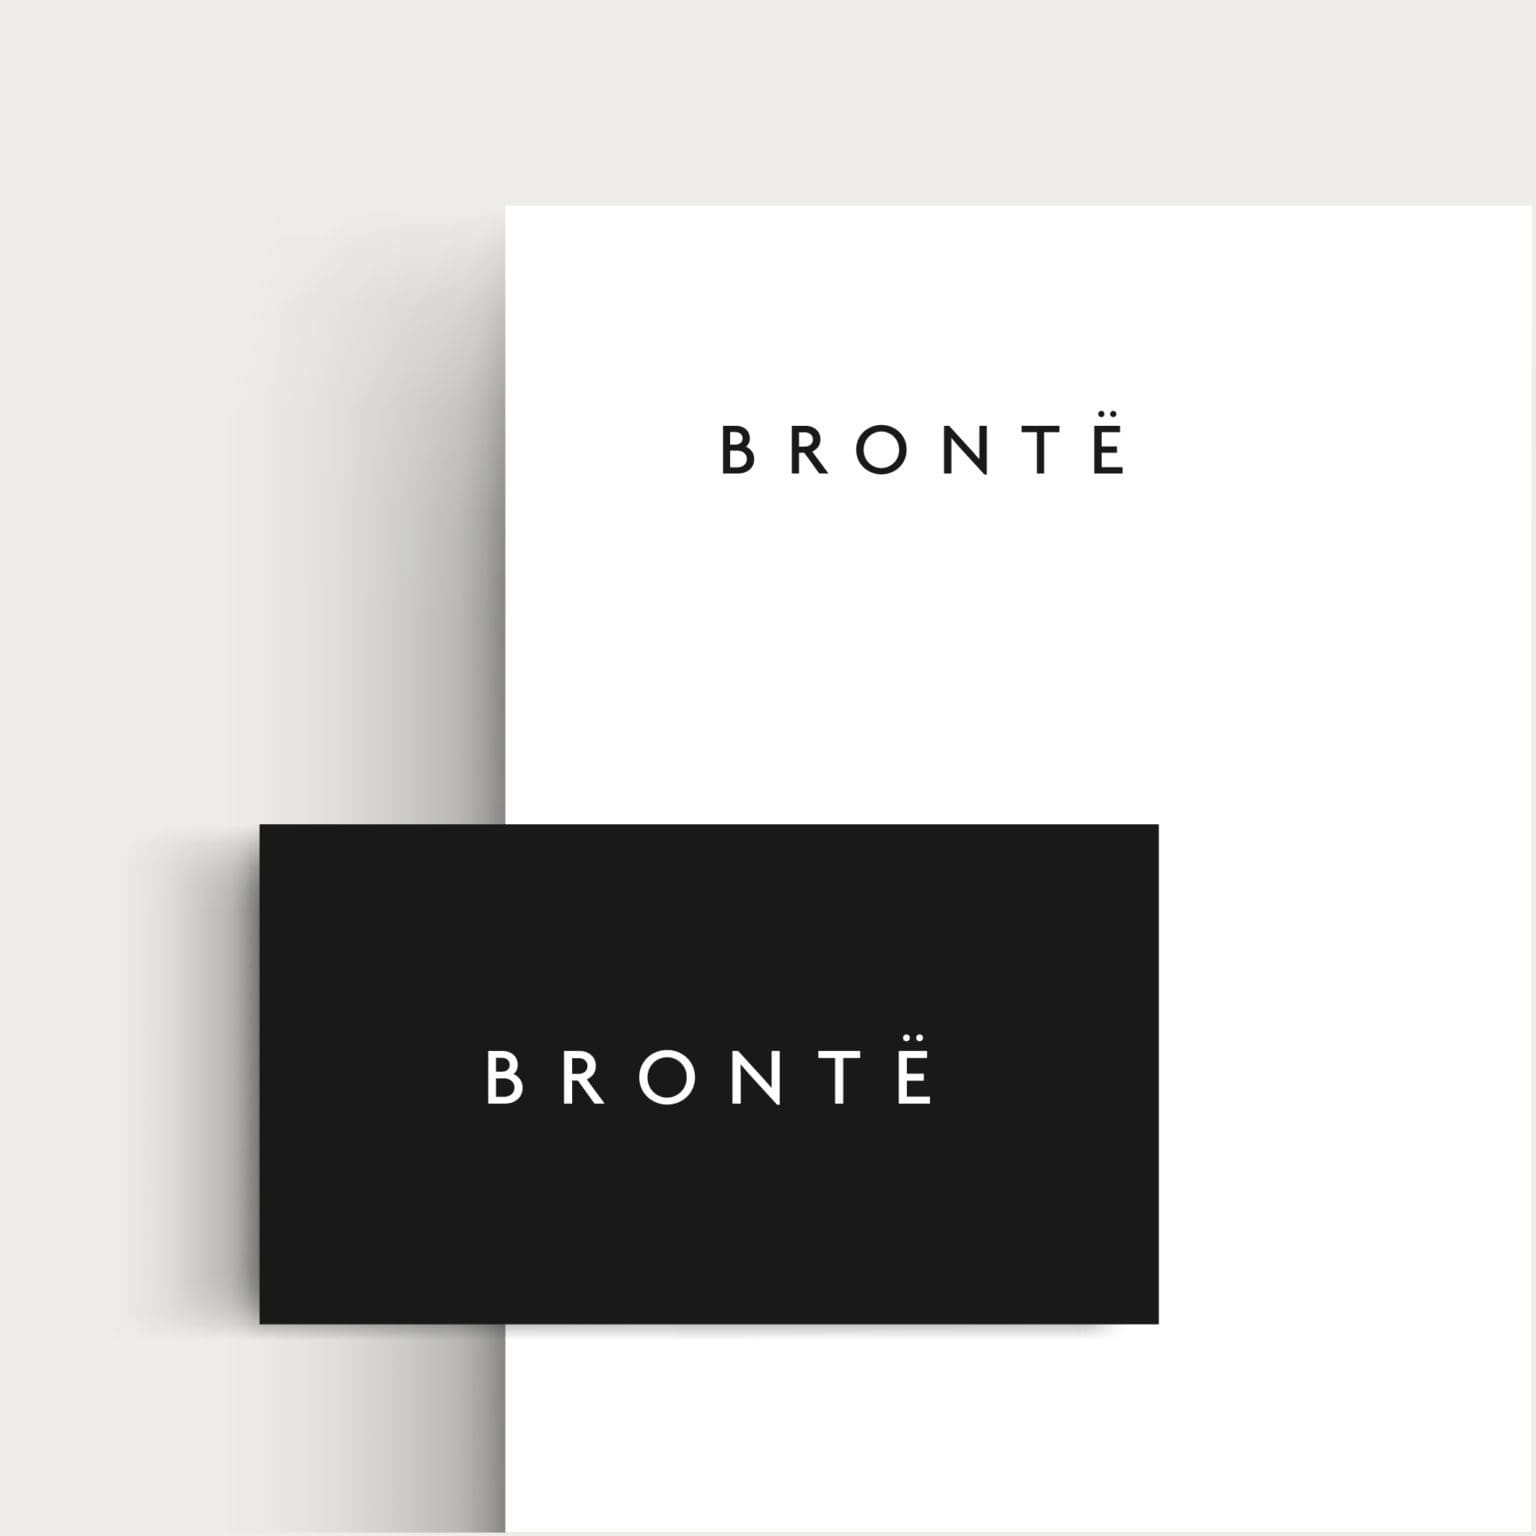 Bronte_Tiles-02